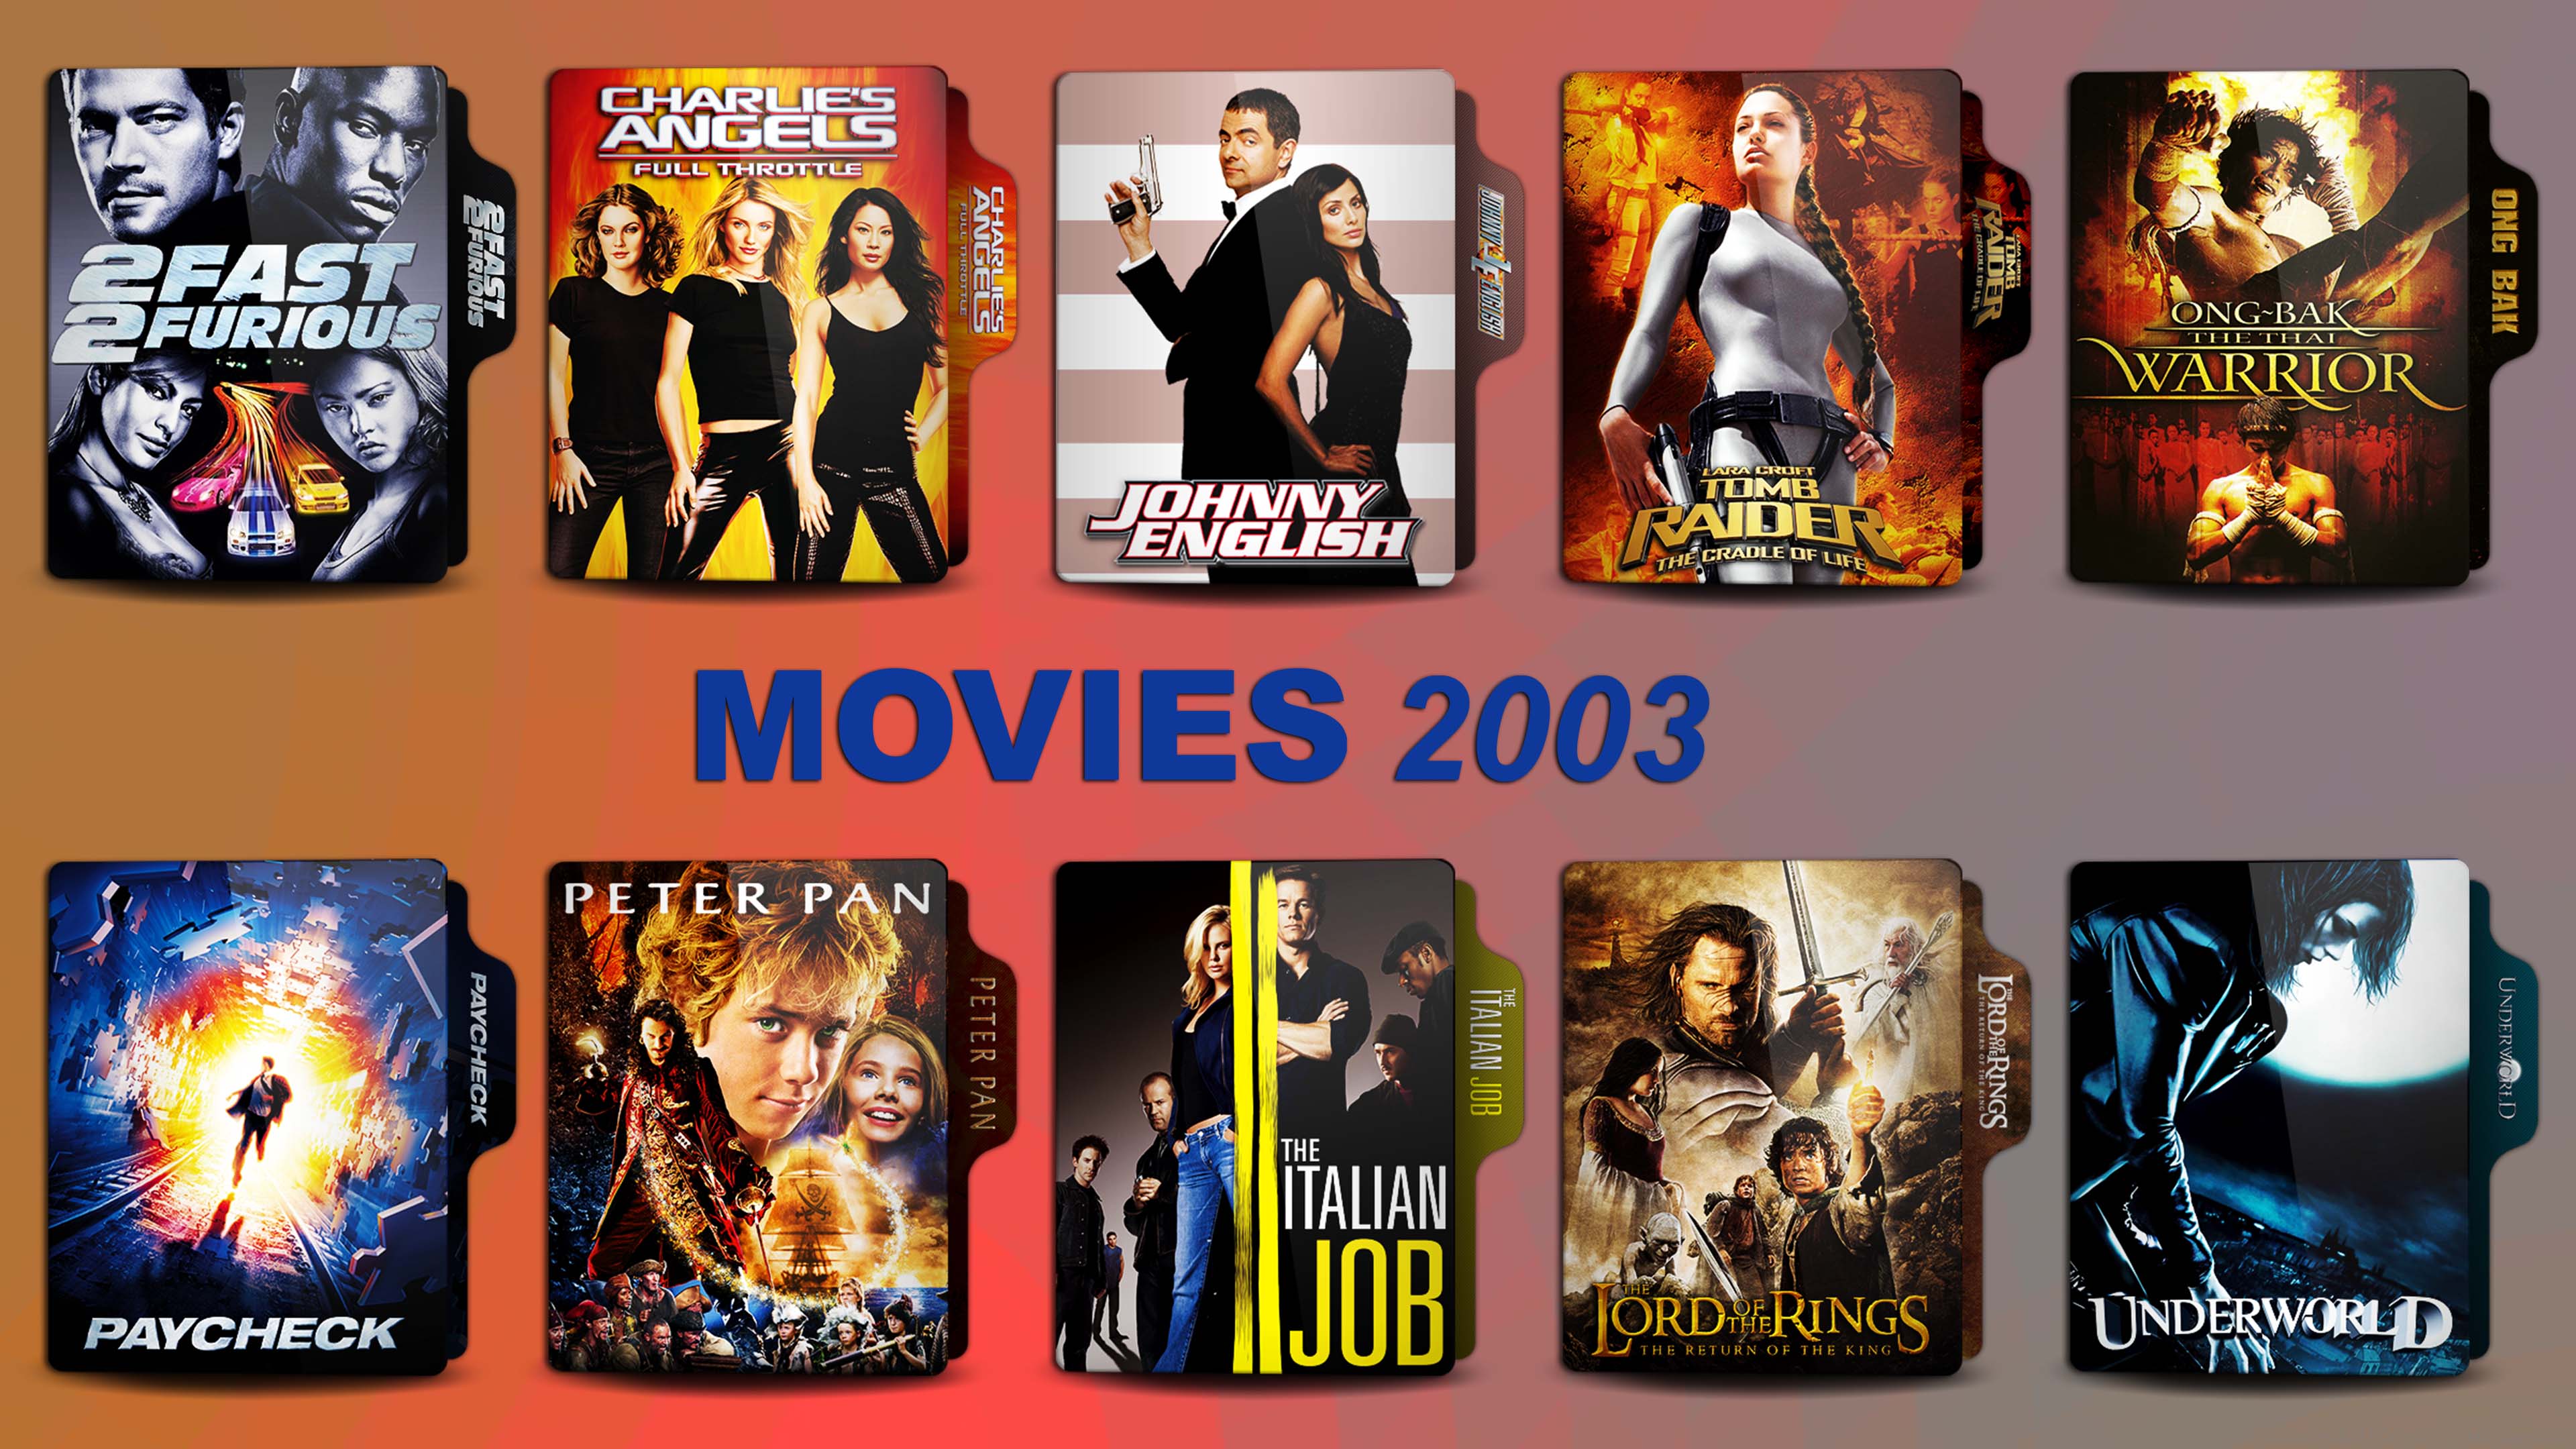 Pieces Of April (2003) Movie Folder Icon by Kittycat159 on DeviantArt